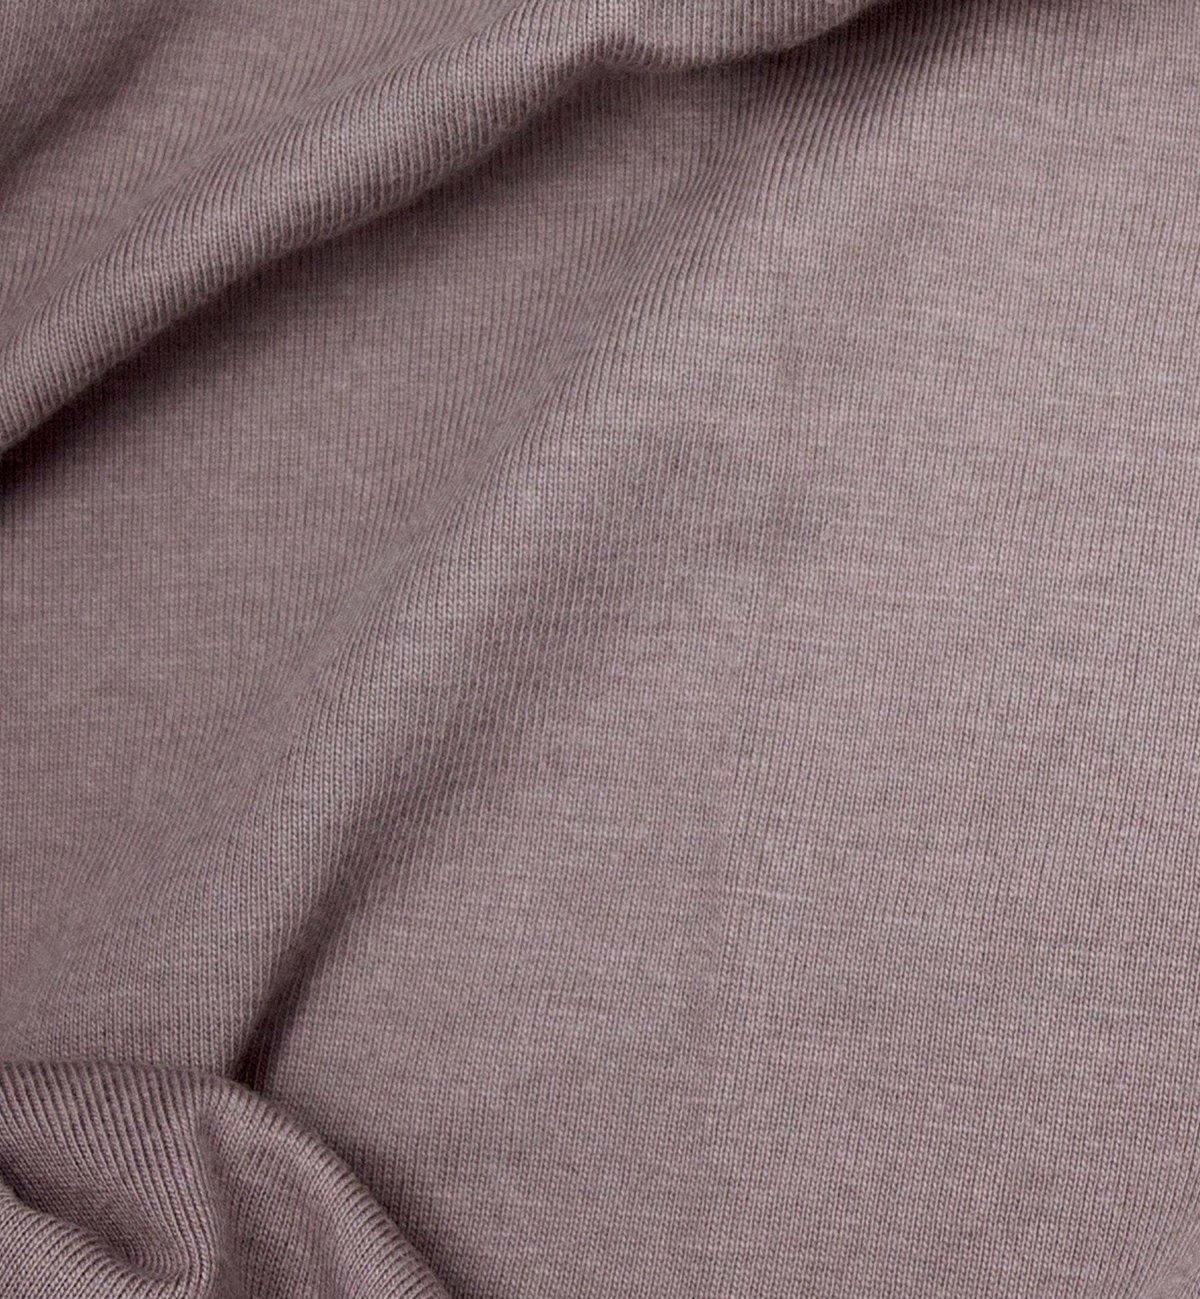 Sábana bajera de Algodón Orgánico jersey para colchón de adulto